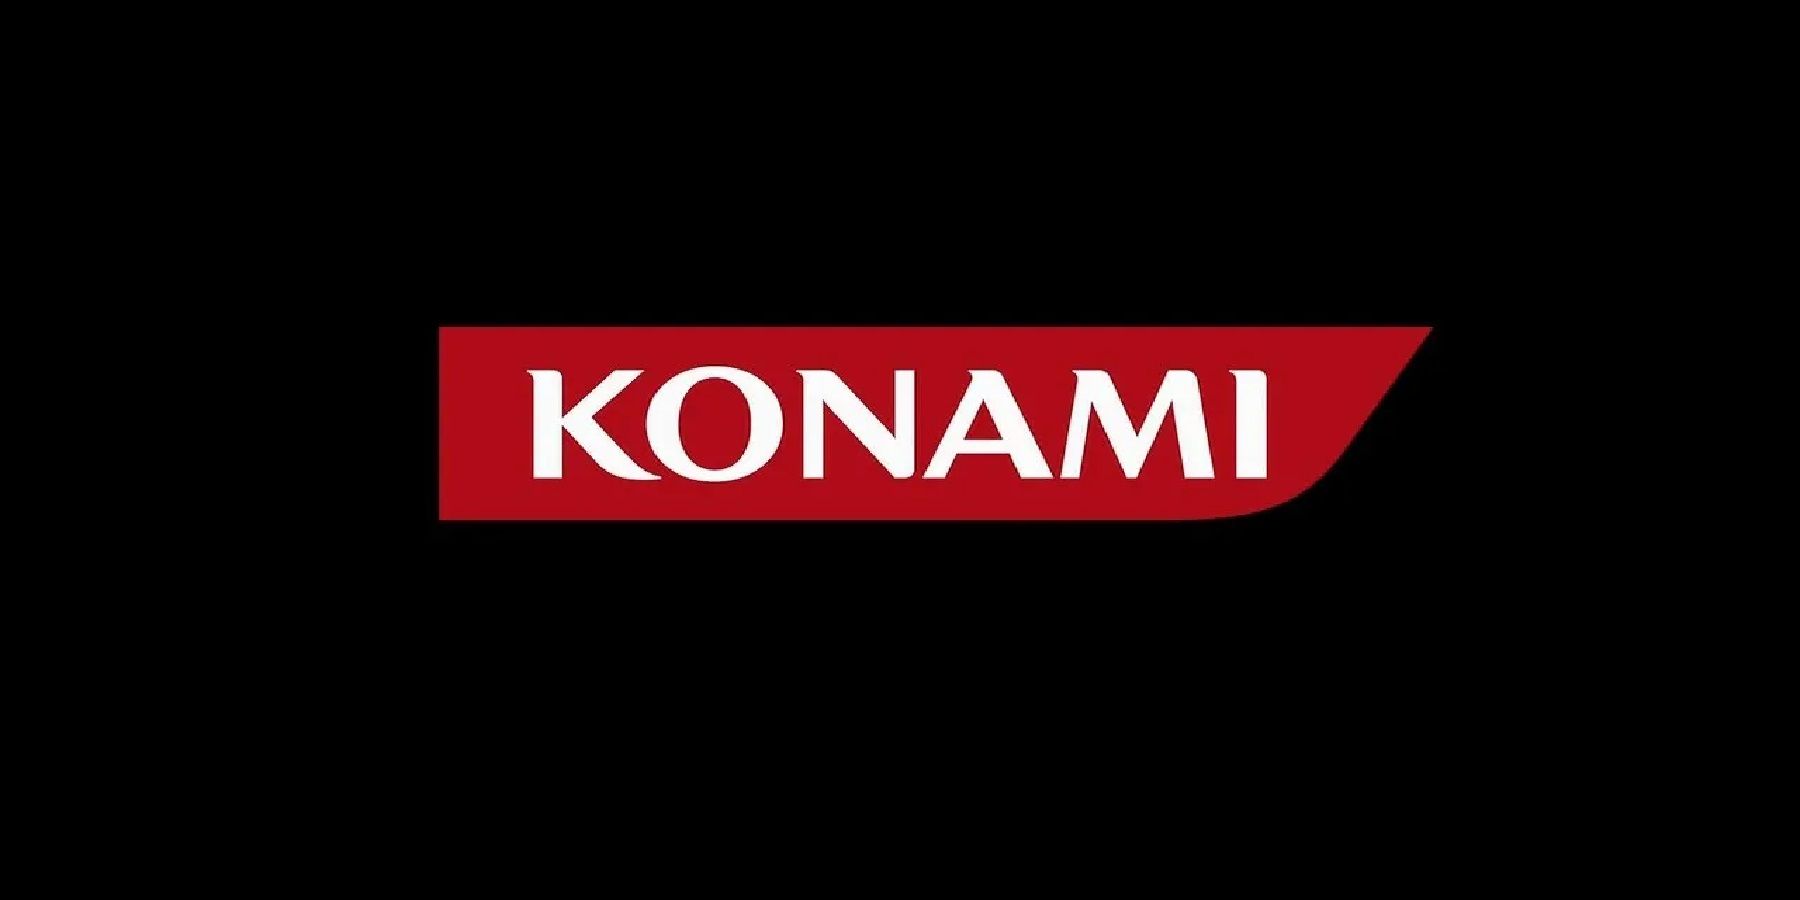 Konami Looking to Build NFT Marketplace, Hiring Web3
Developers